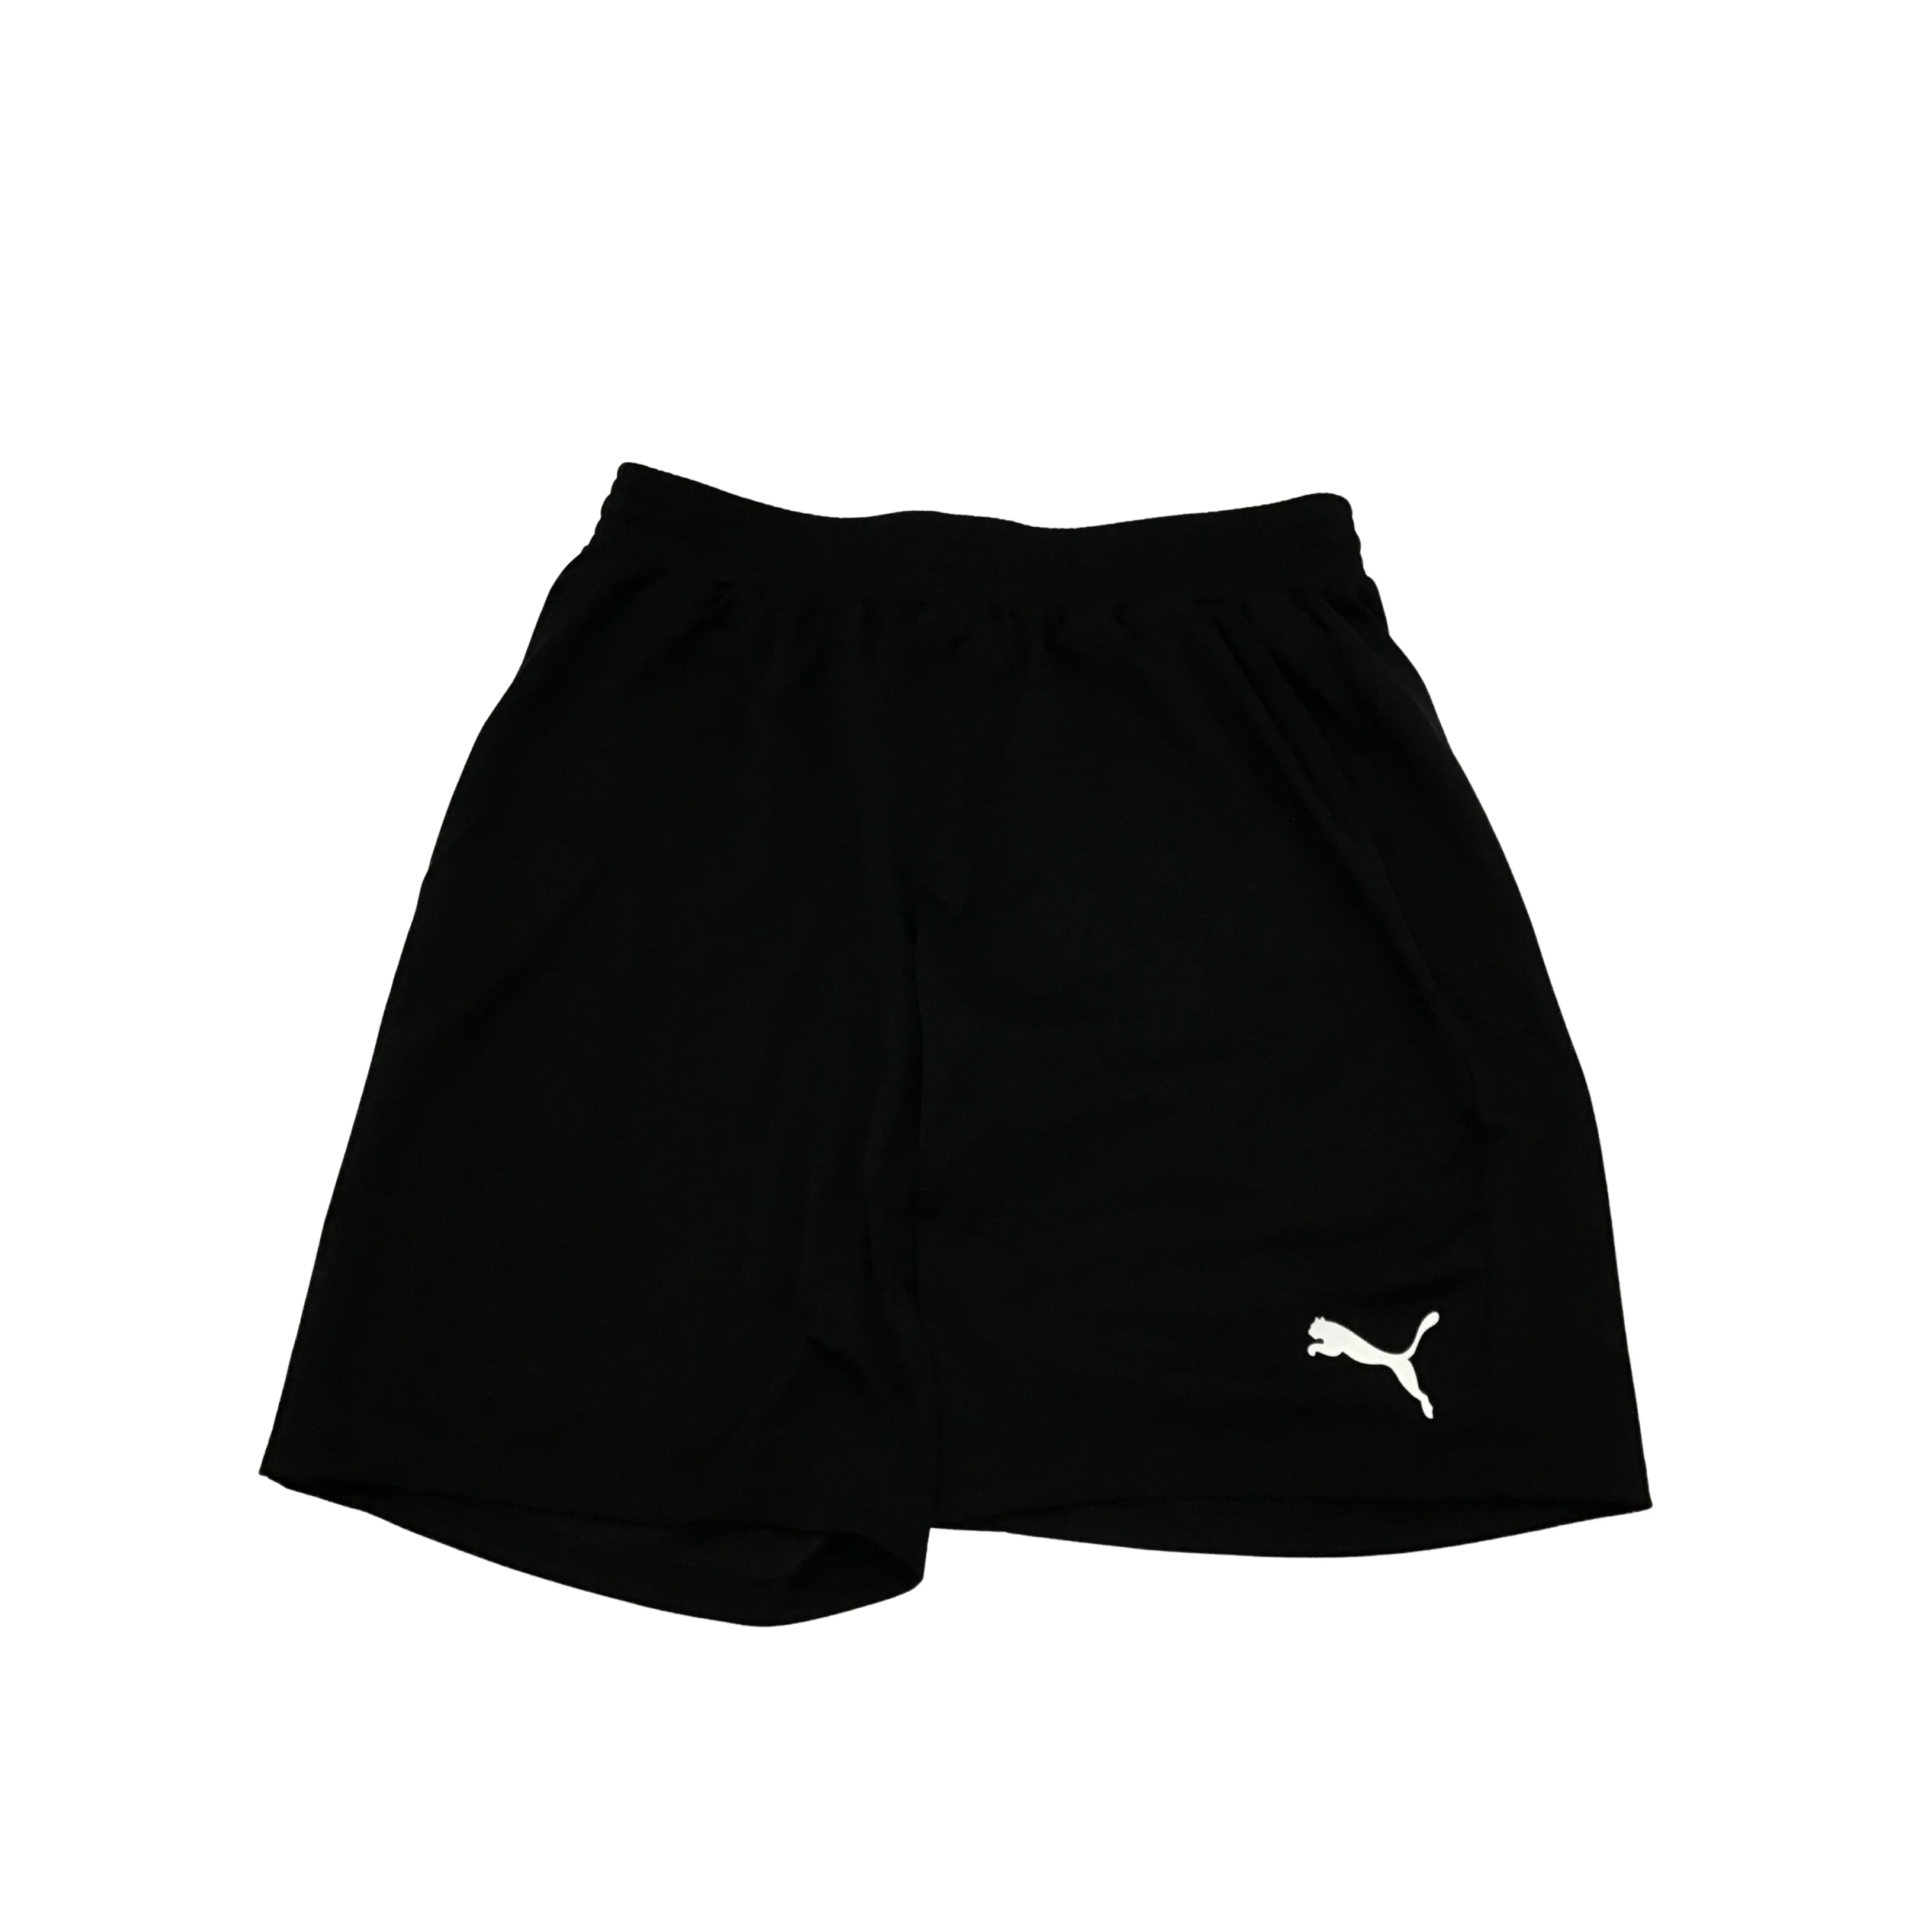 Puma : Men's Shorts / Black / Size XL